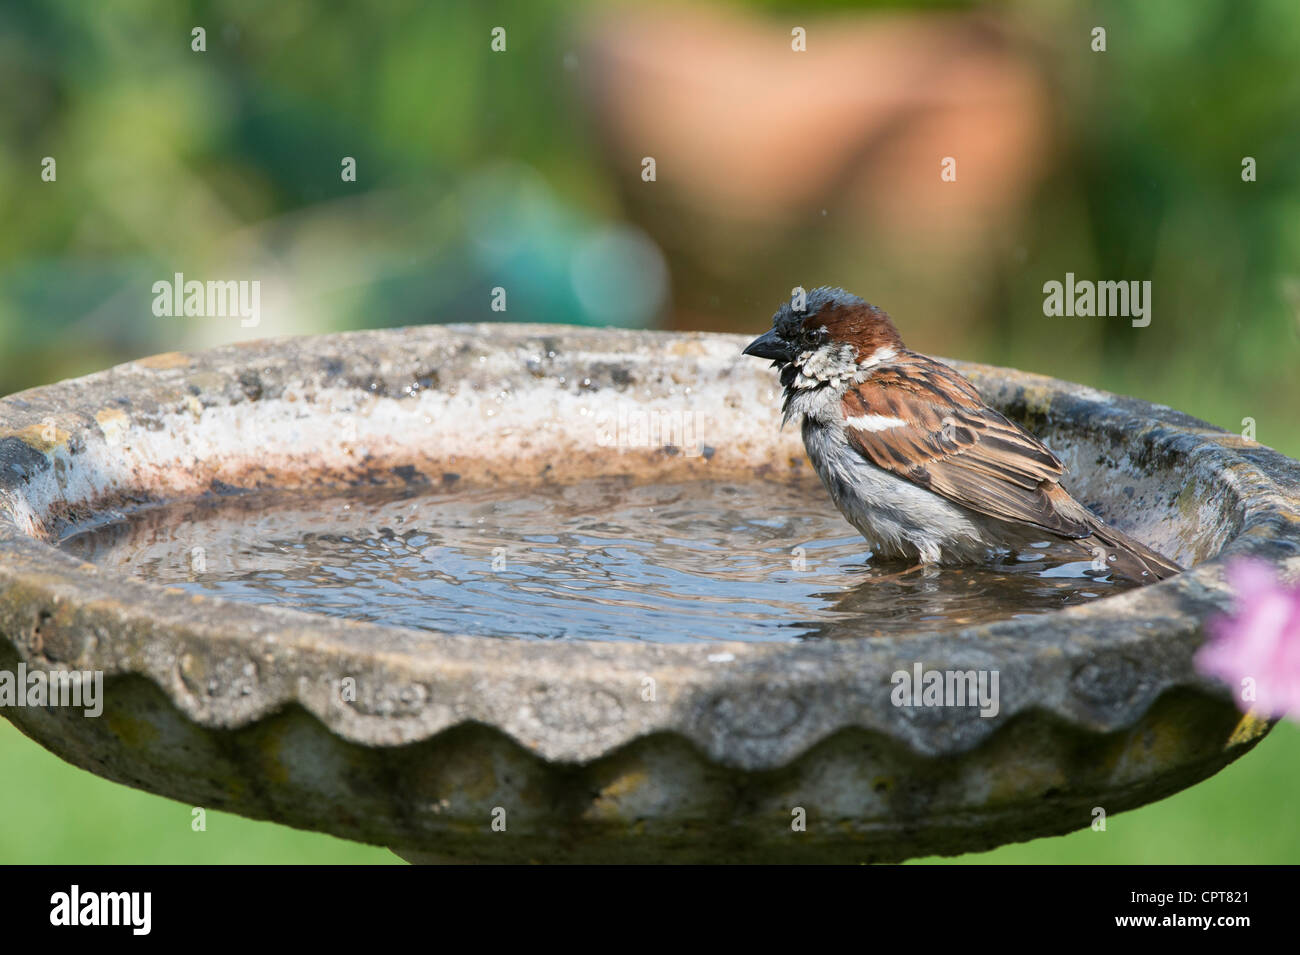 House sparrow in a birdbath washing. UK Stock Photo